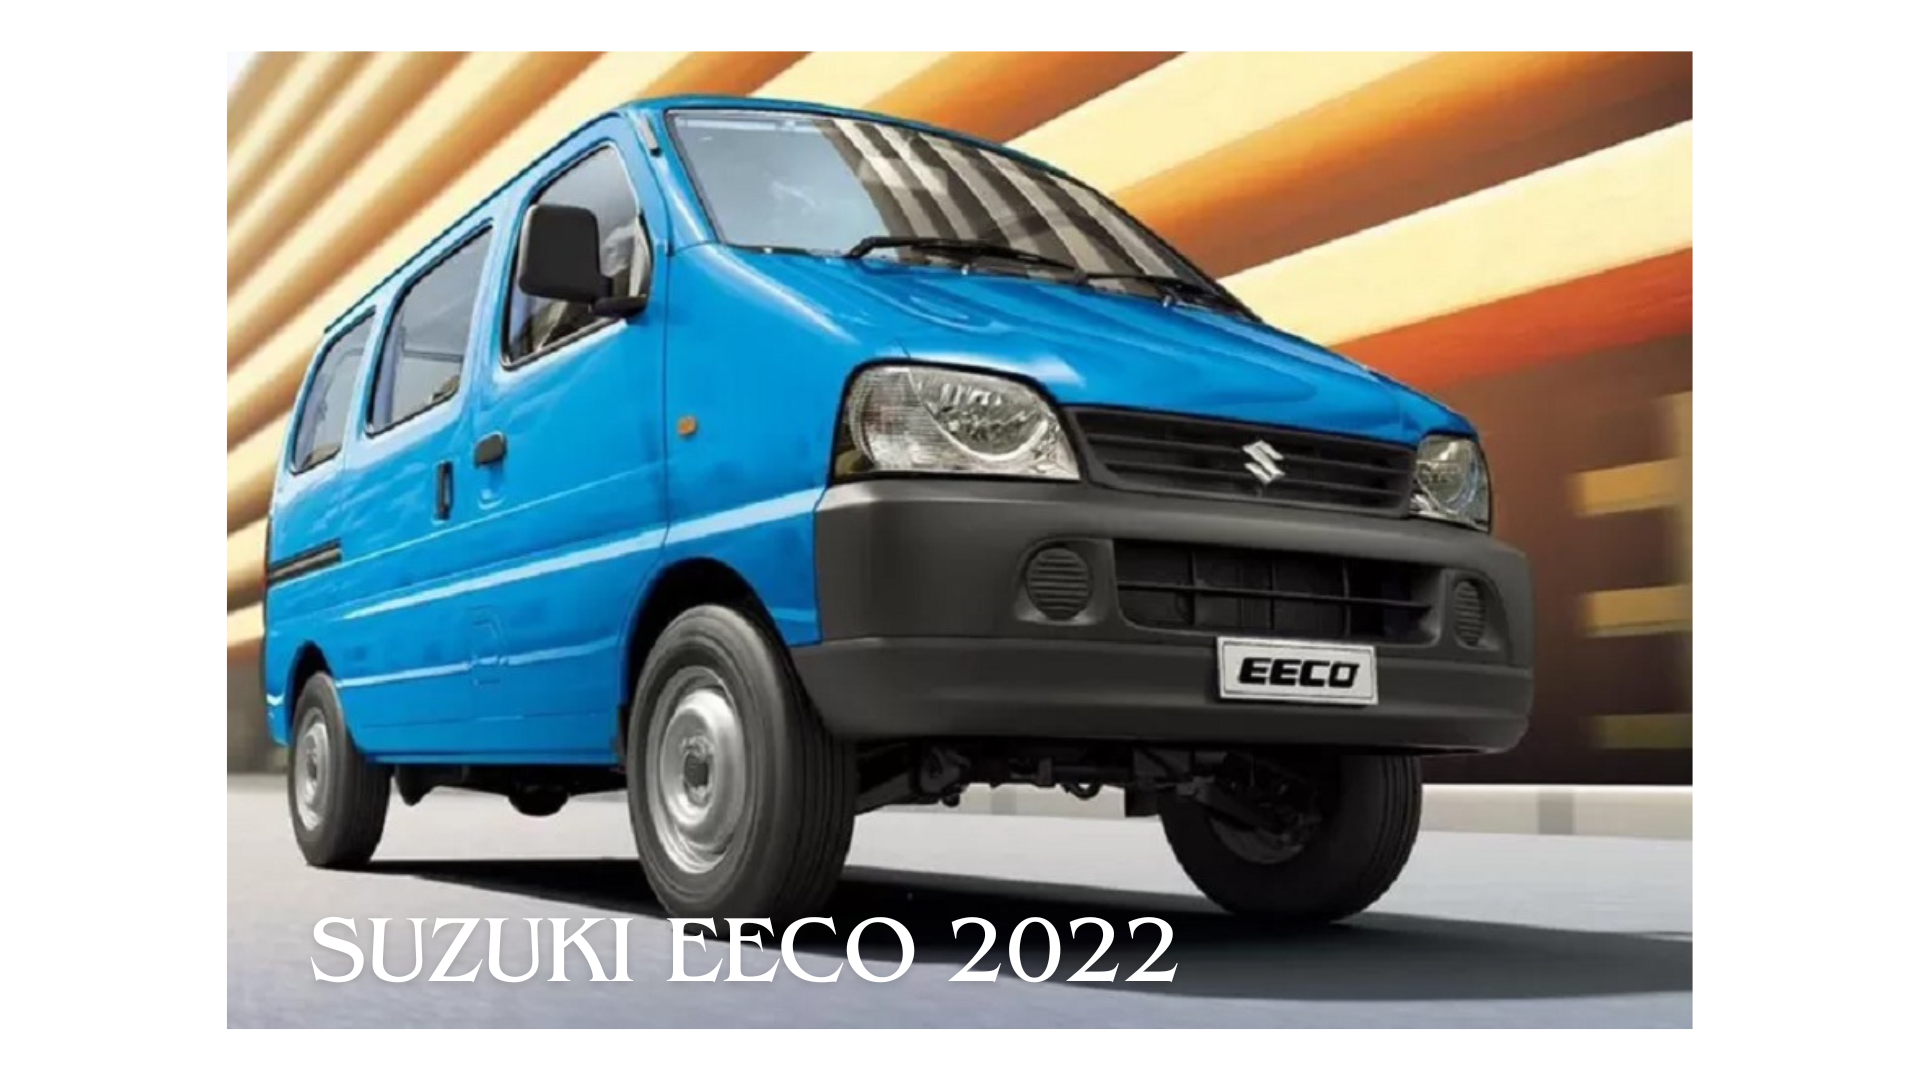 Suzuki Eeco 2022, MPV dengan Mesin Baru yang Lebih Bertenaga